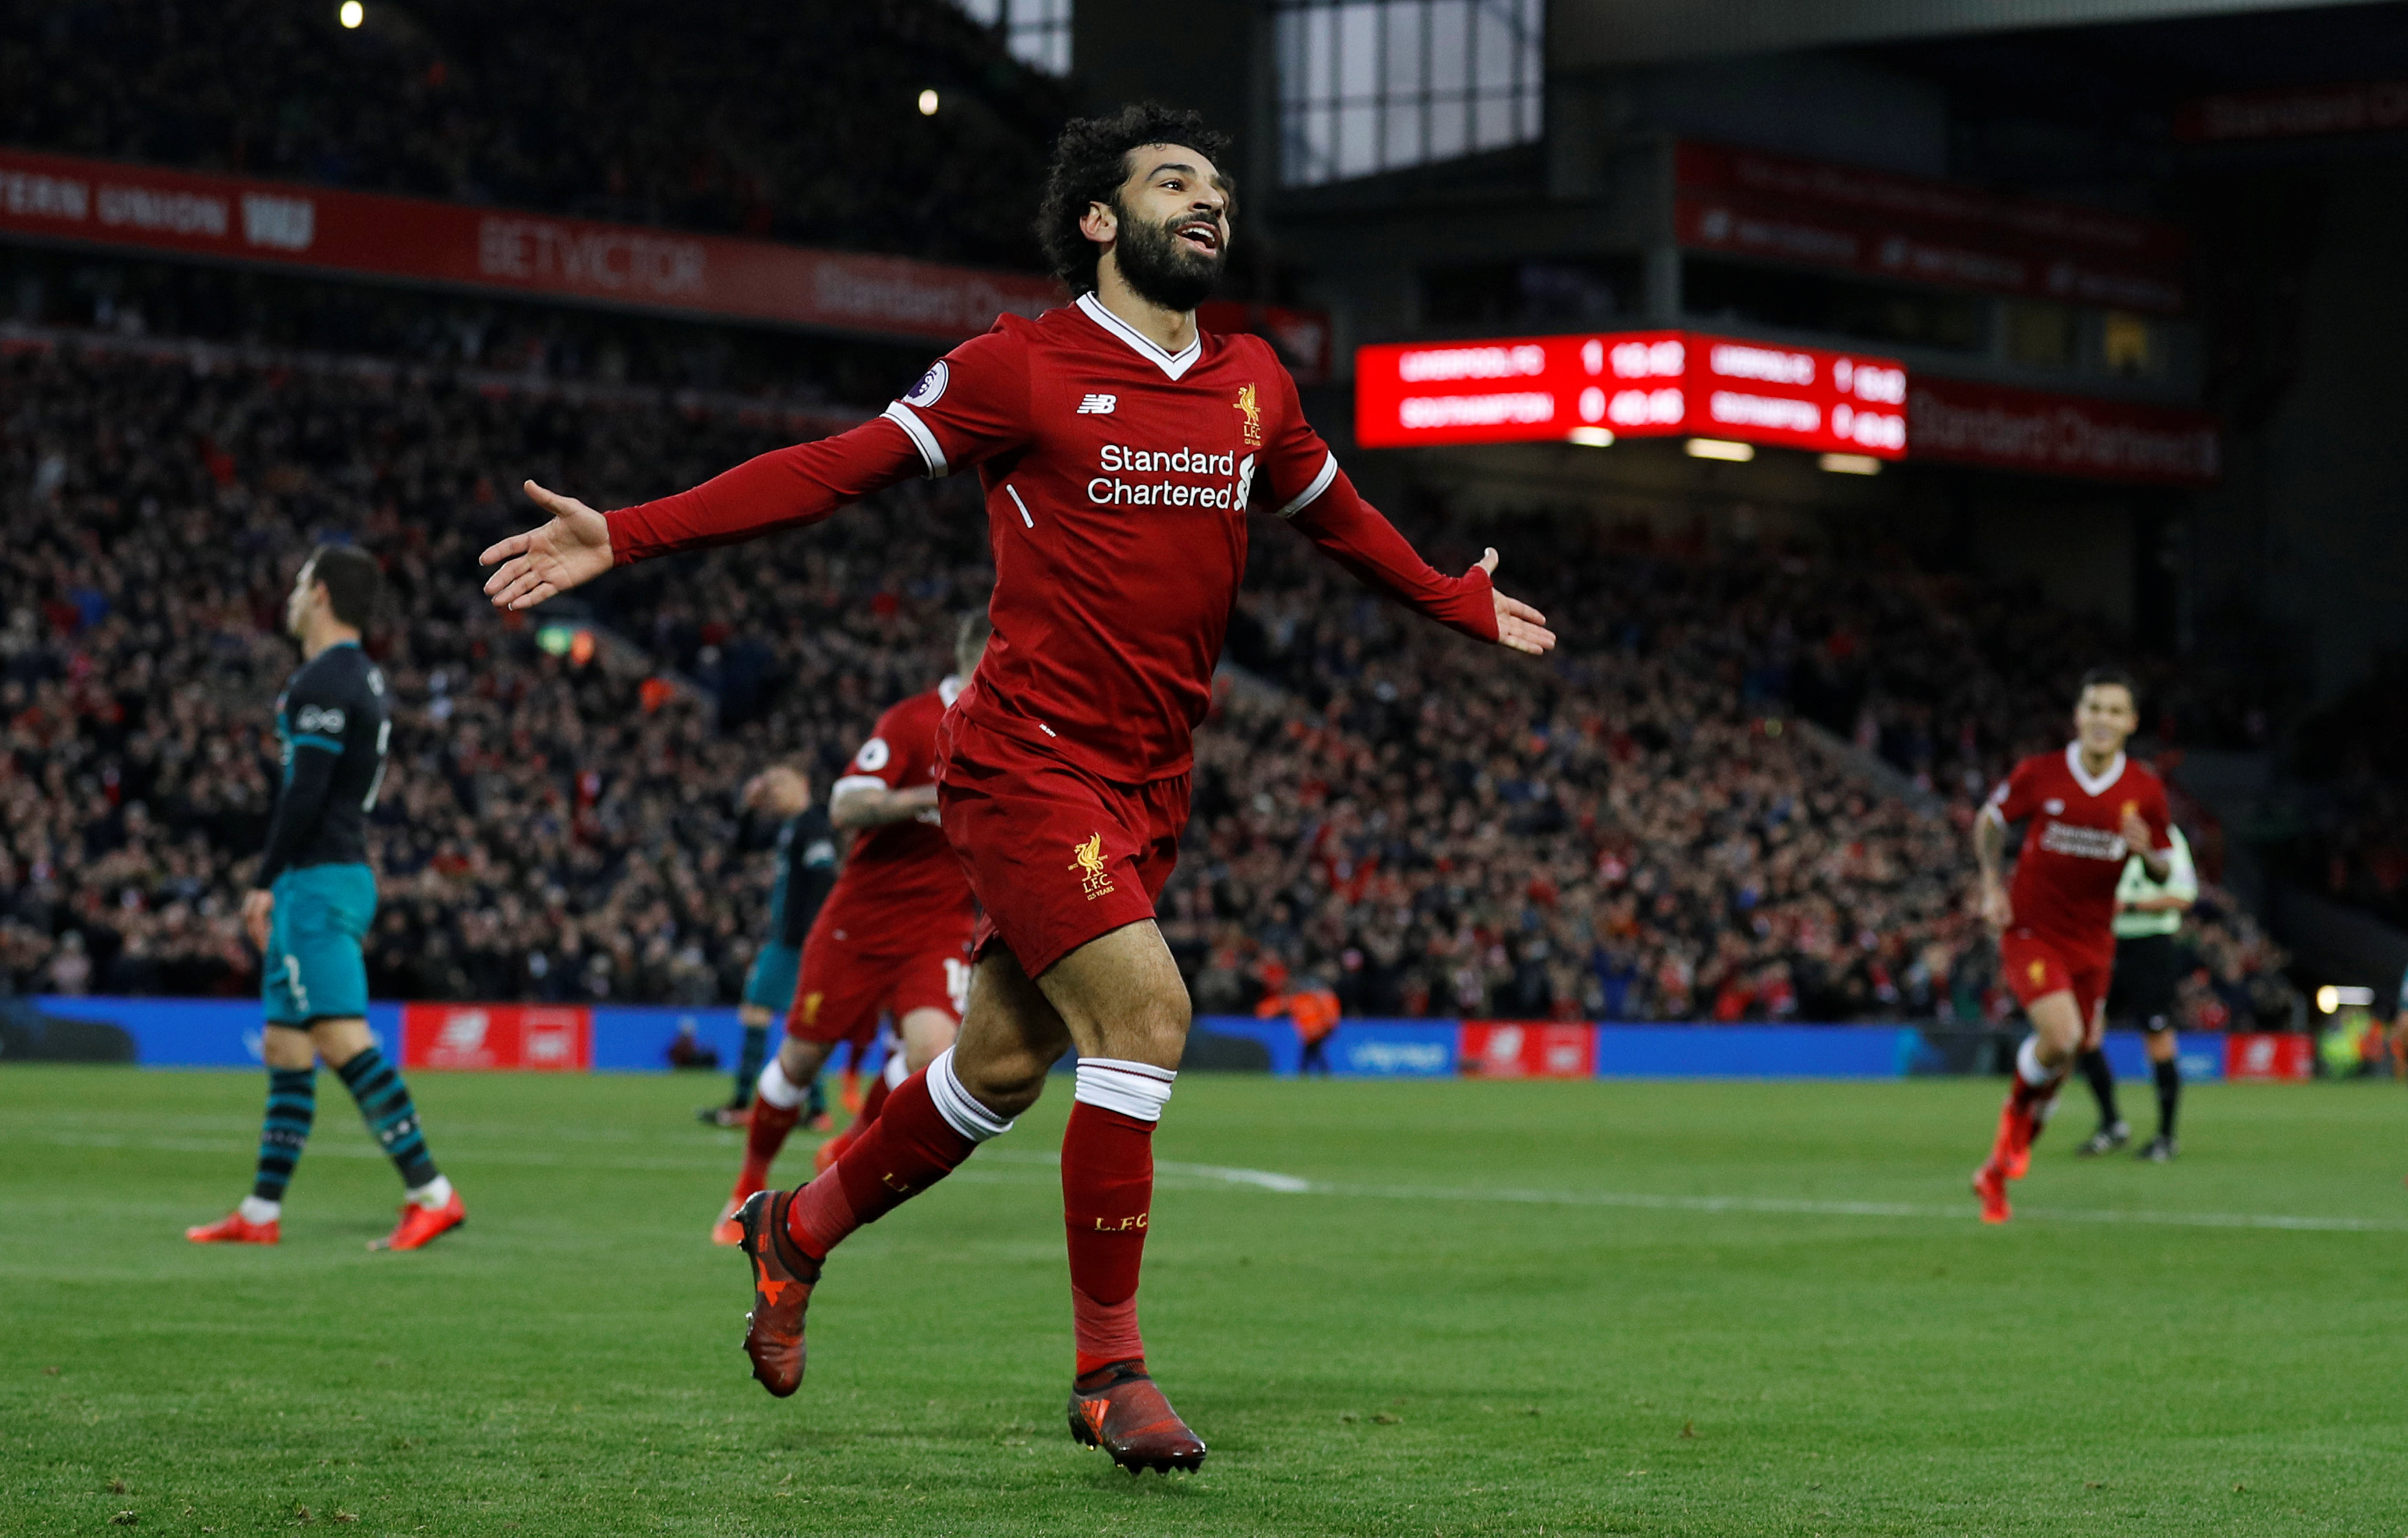 Football: Liverpool rout Southampton as Salah breaks Fowler record